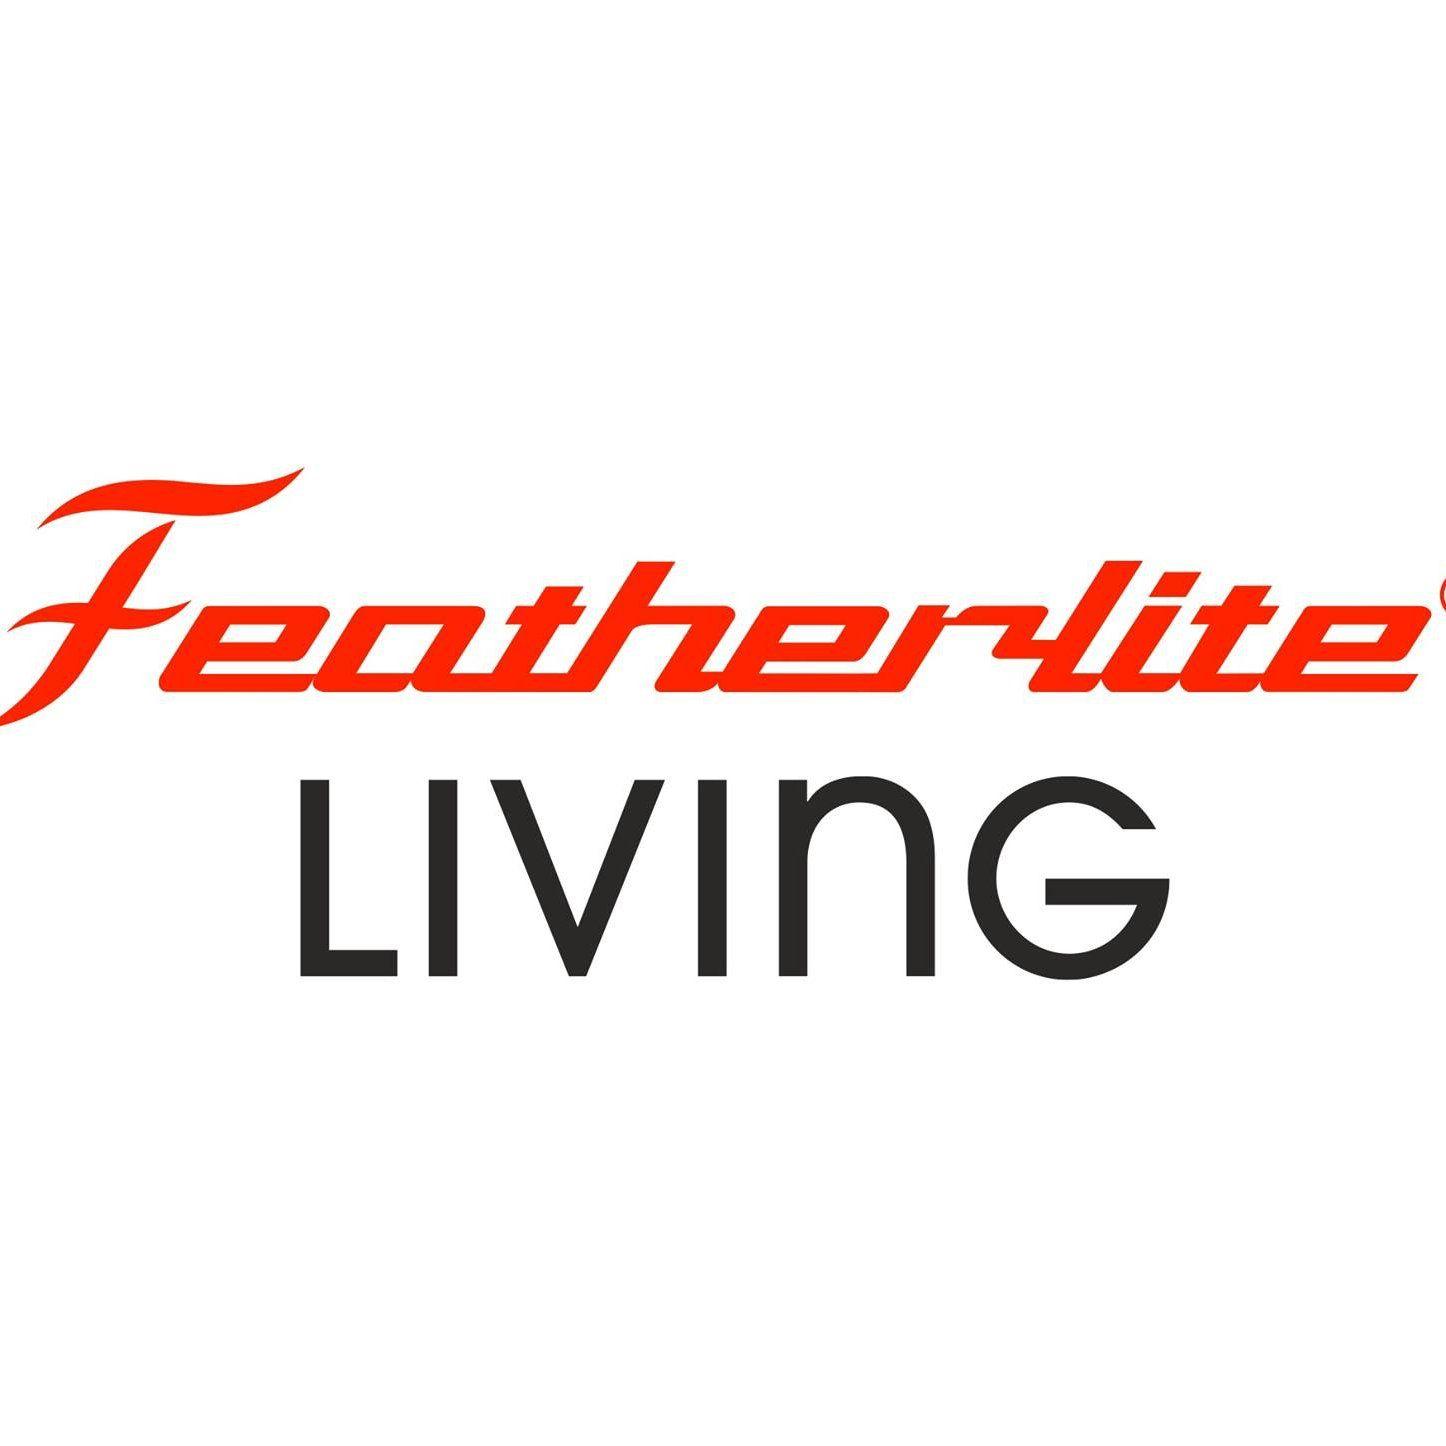 Featherlite Logo - Featherlite living